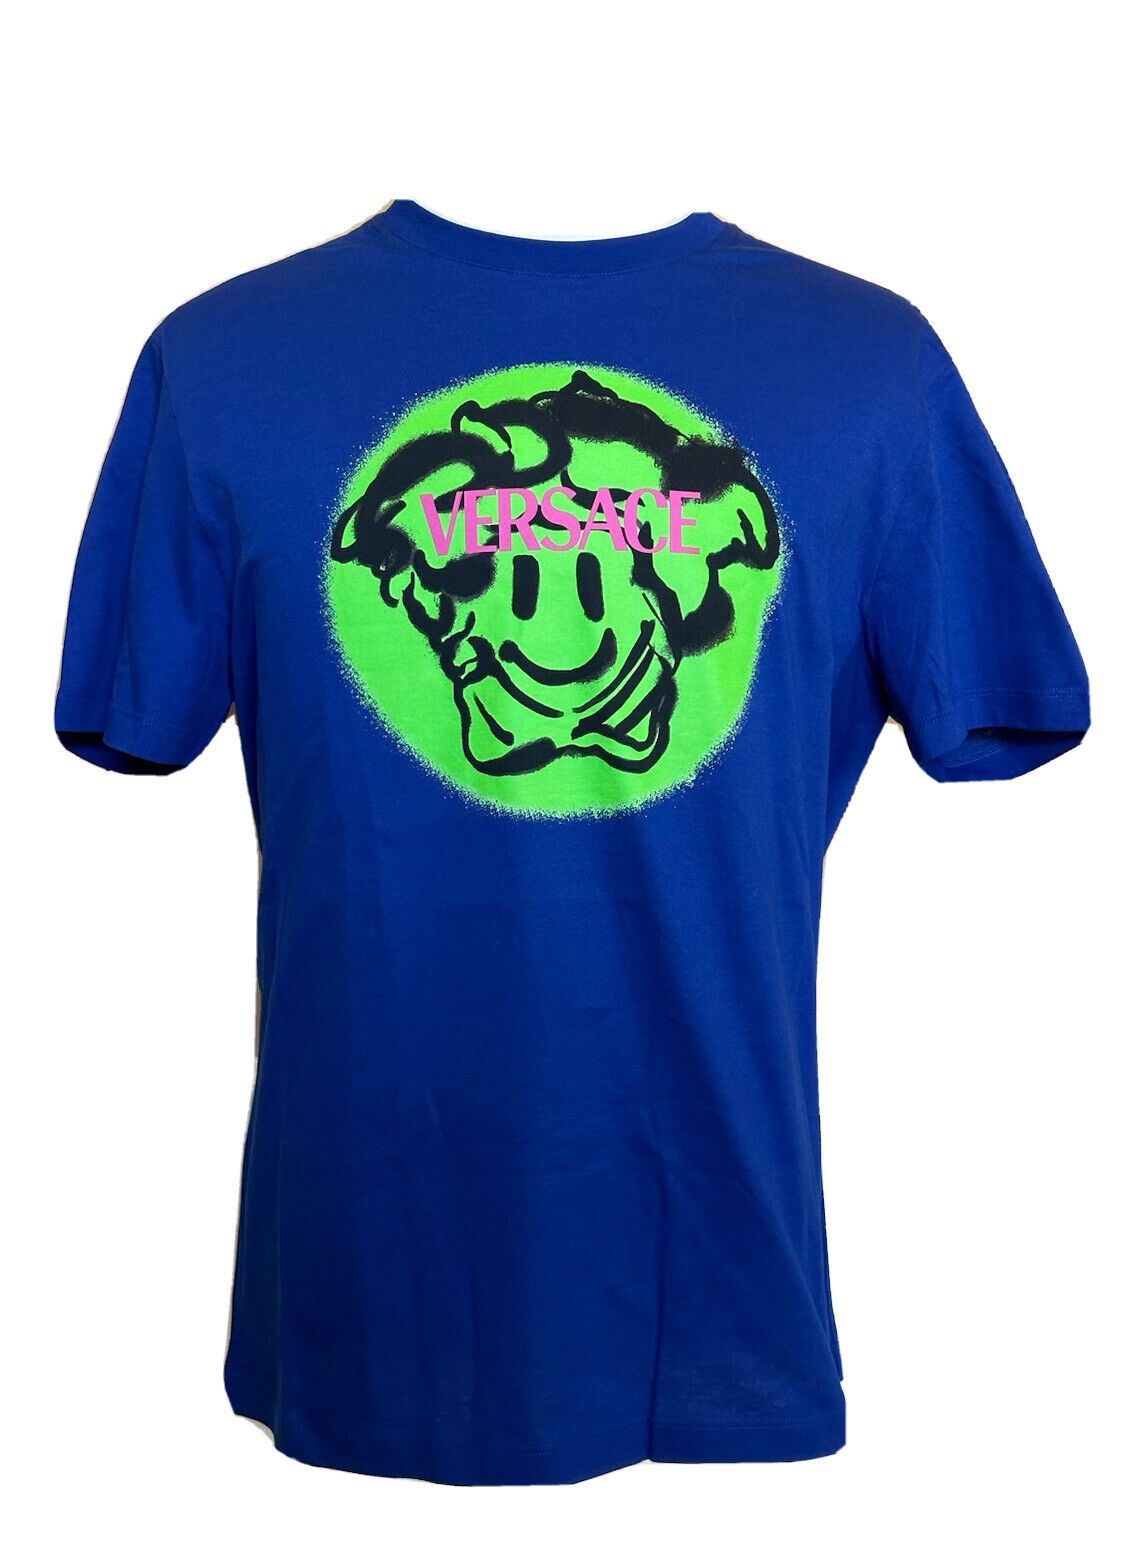 NWT $450 Versace Smiley Medusa Logo Blue/Lime Jersey T-Shirt 5XL 1002464